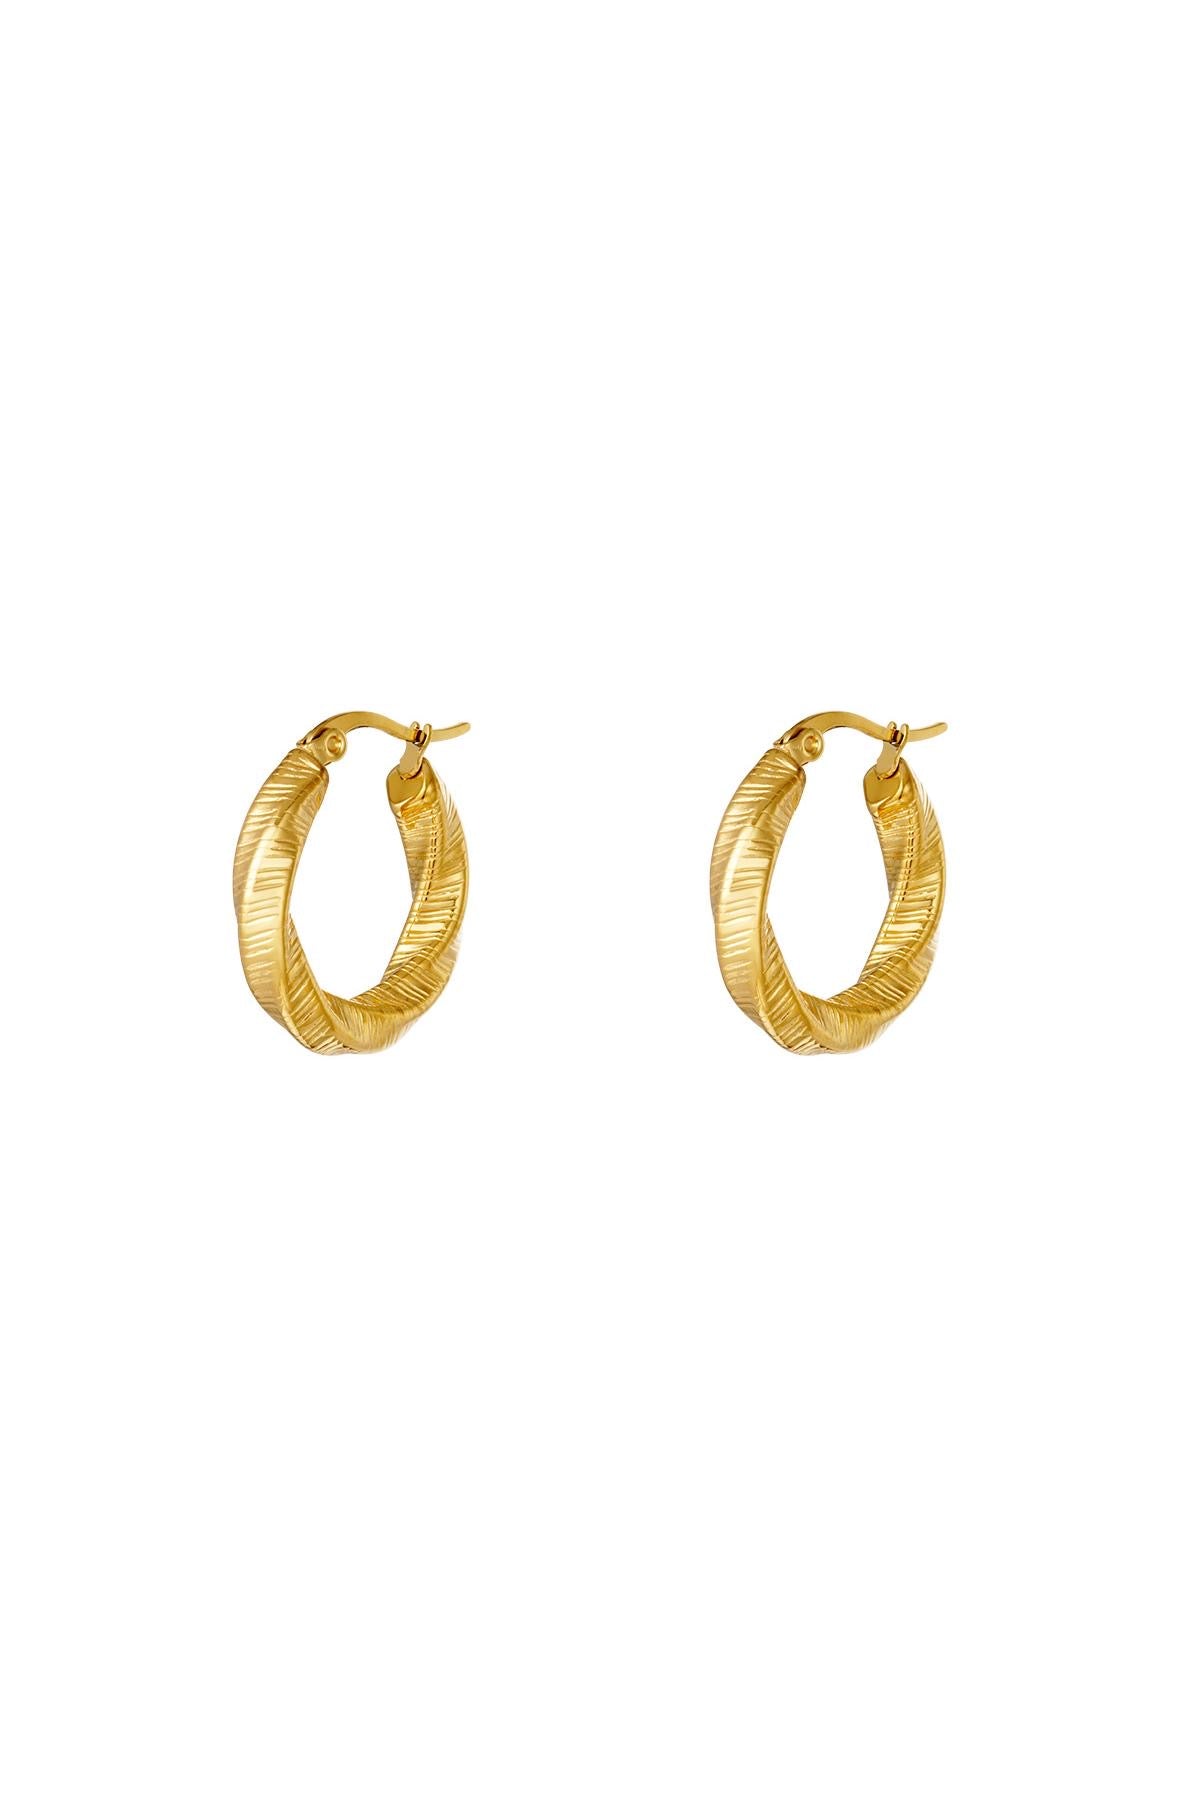 Jet earrings - small - gold